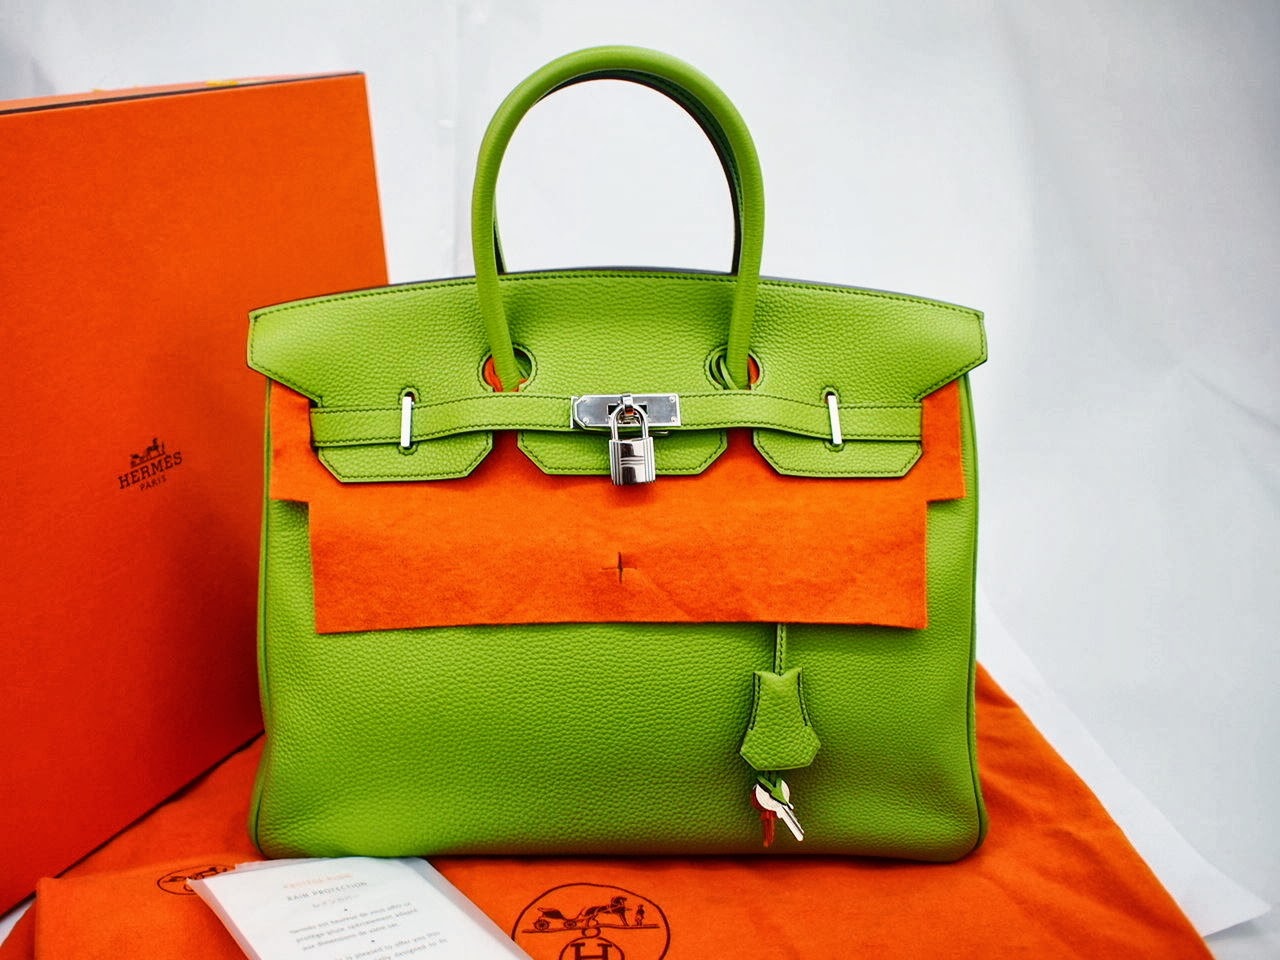 authentic hermes birkin bags for sale, faux birkin